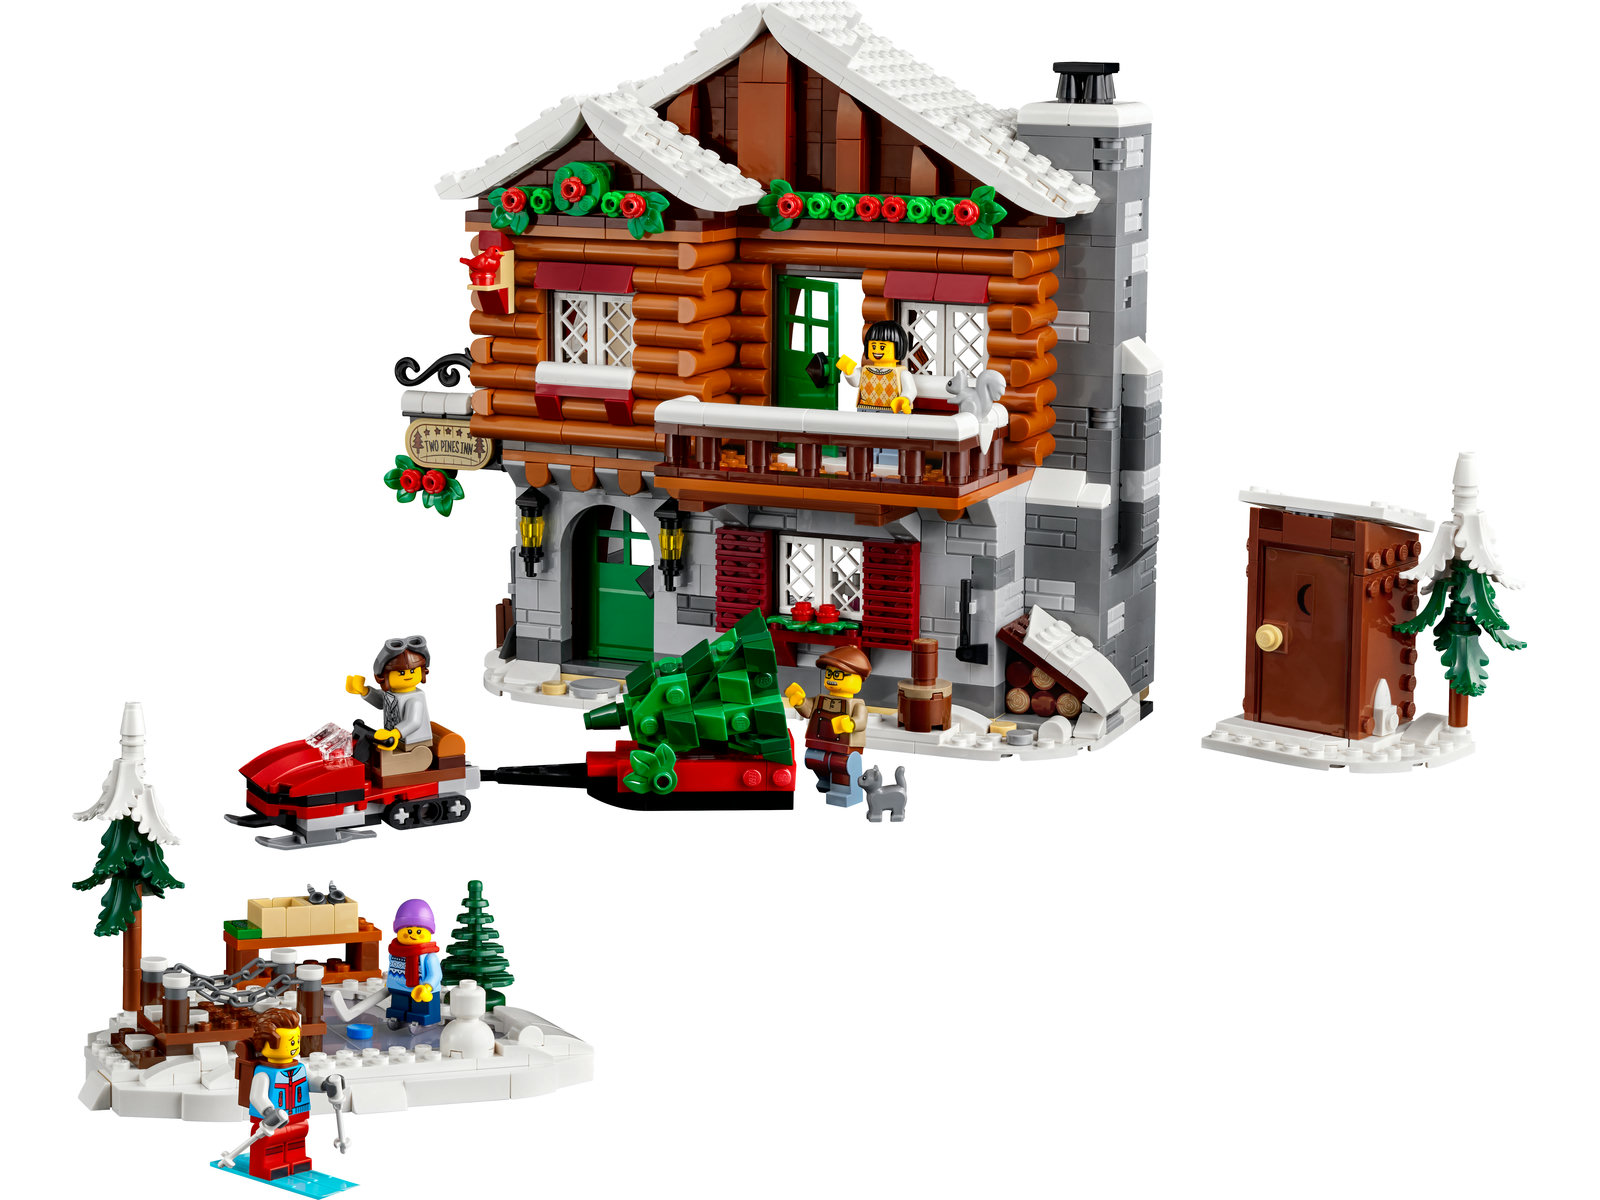 LEGO® Icons 10325 - Almhütte